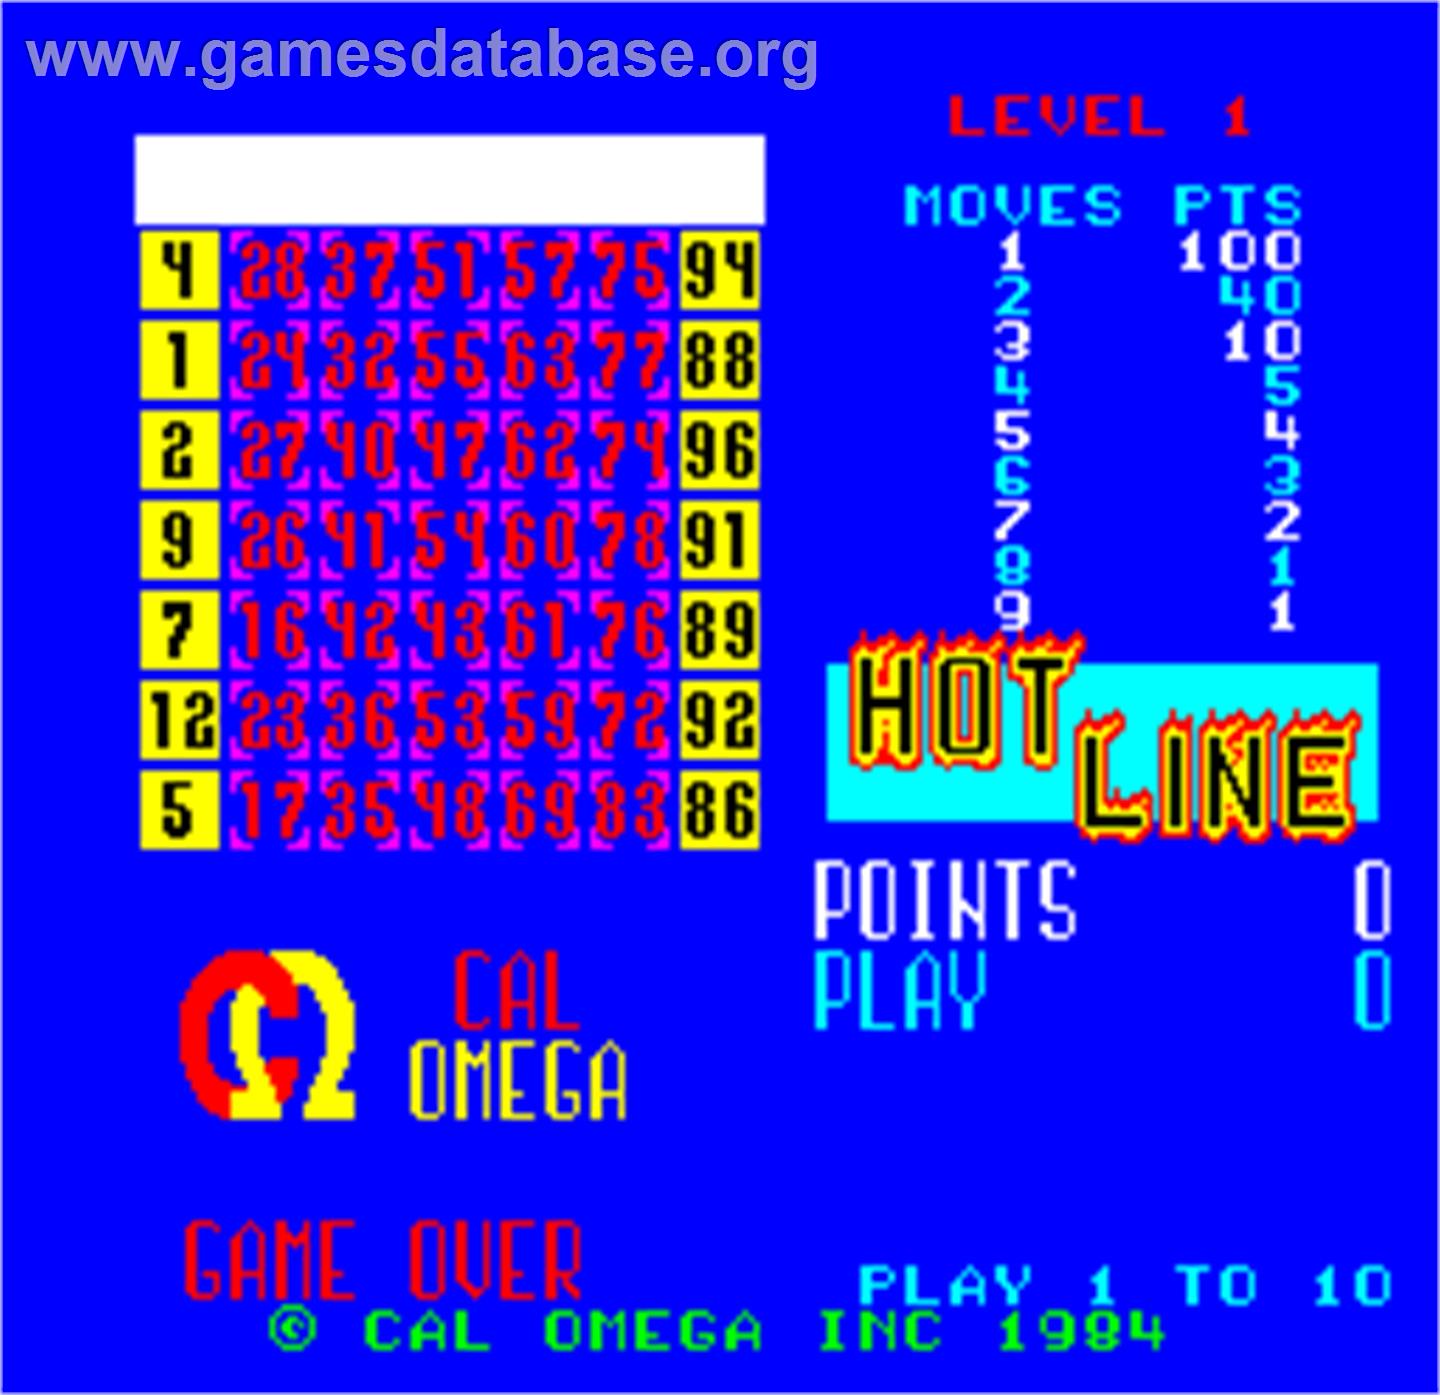 Cal Omega - Game 23.6 - Arcade - Artwork - In Game